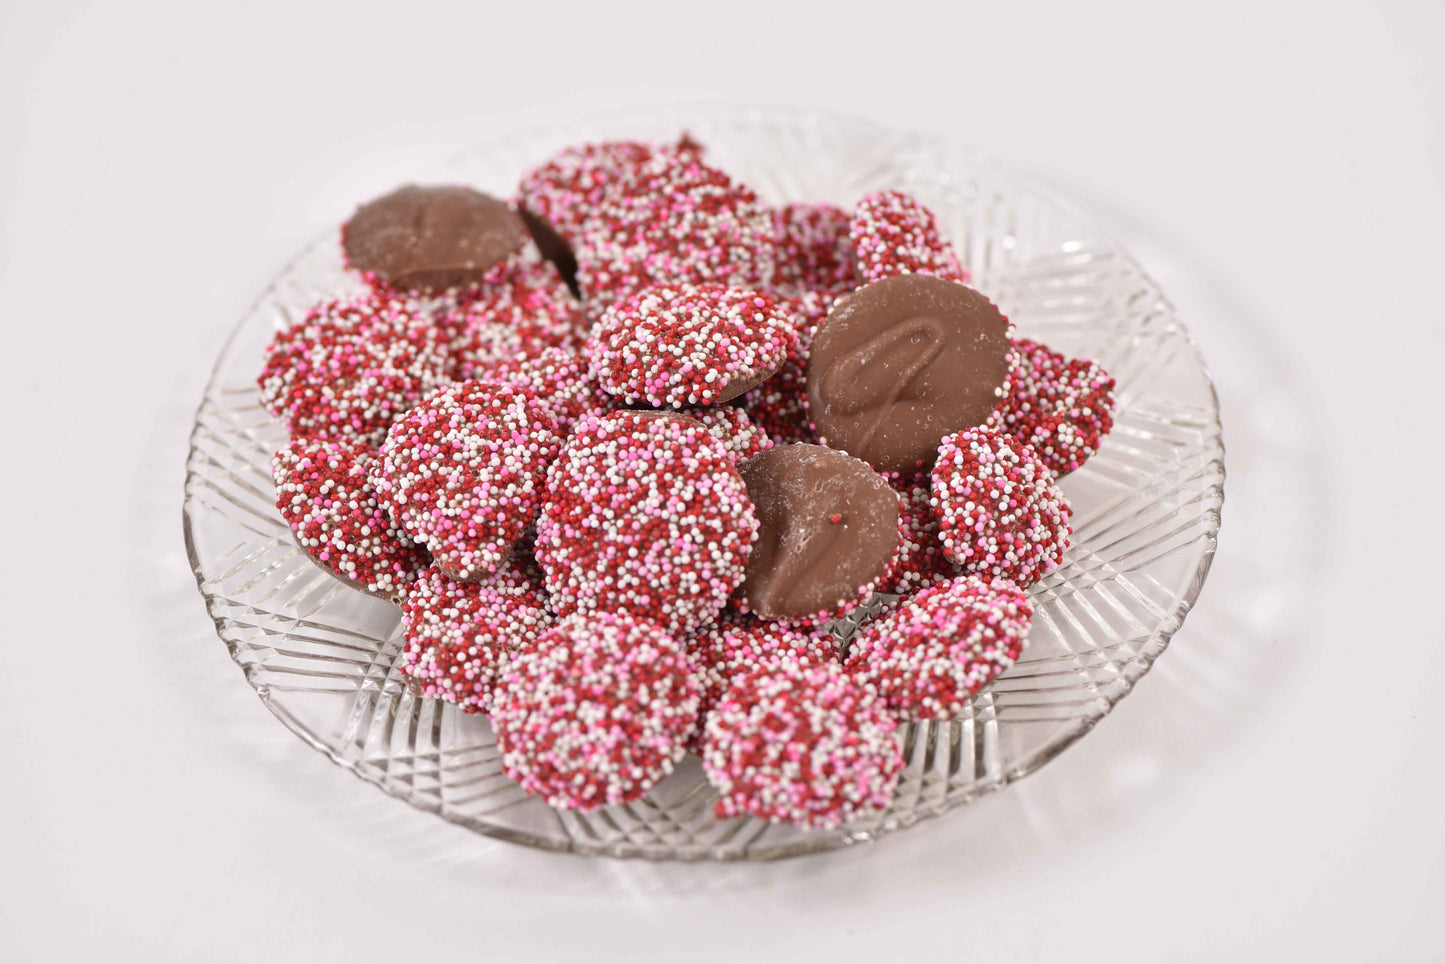 12 oz Milk Chocolate Valentine's Day Non-Pareils - Conrad's Confectionery